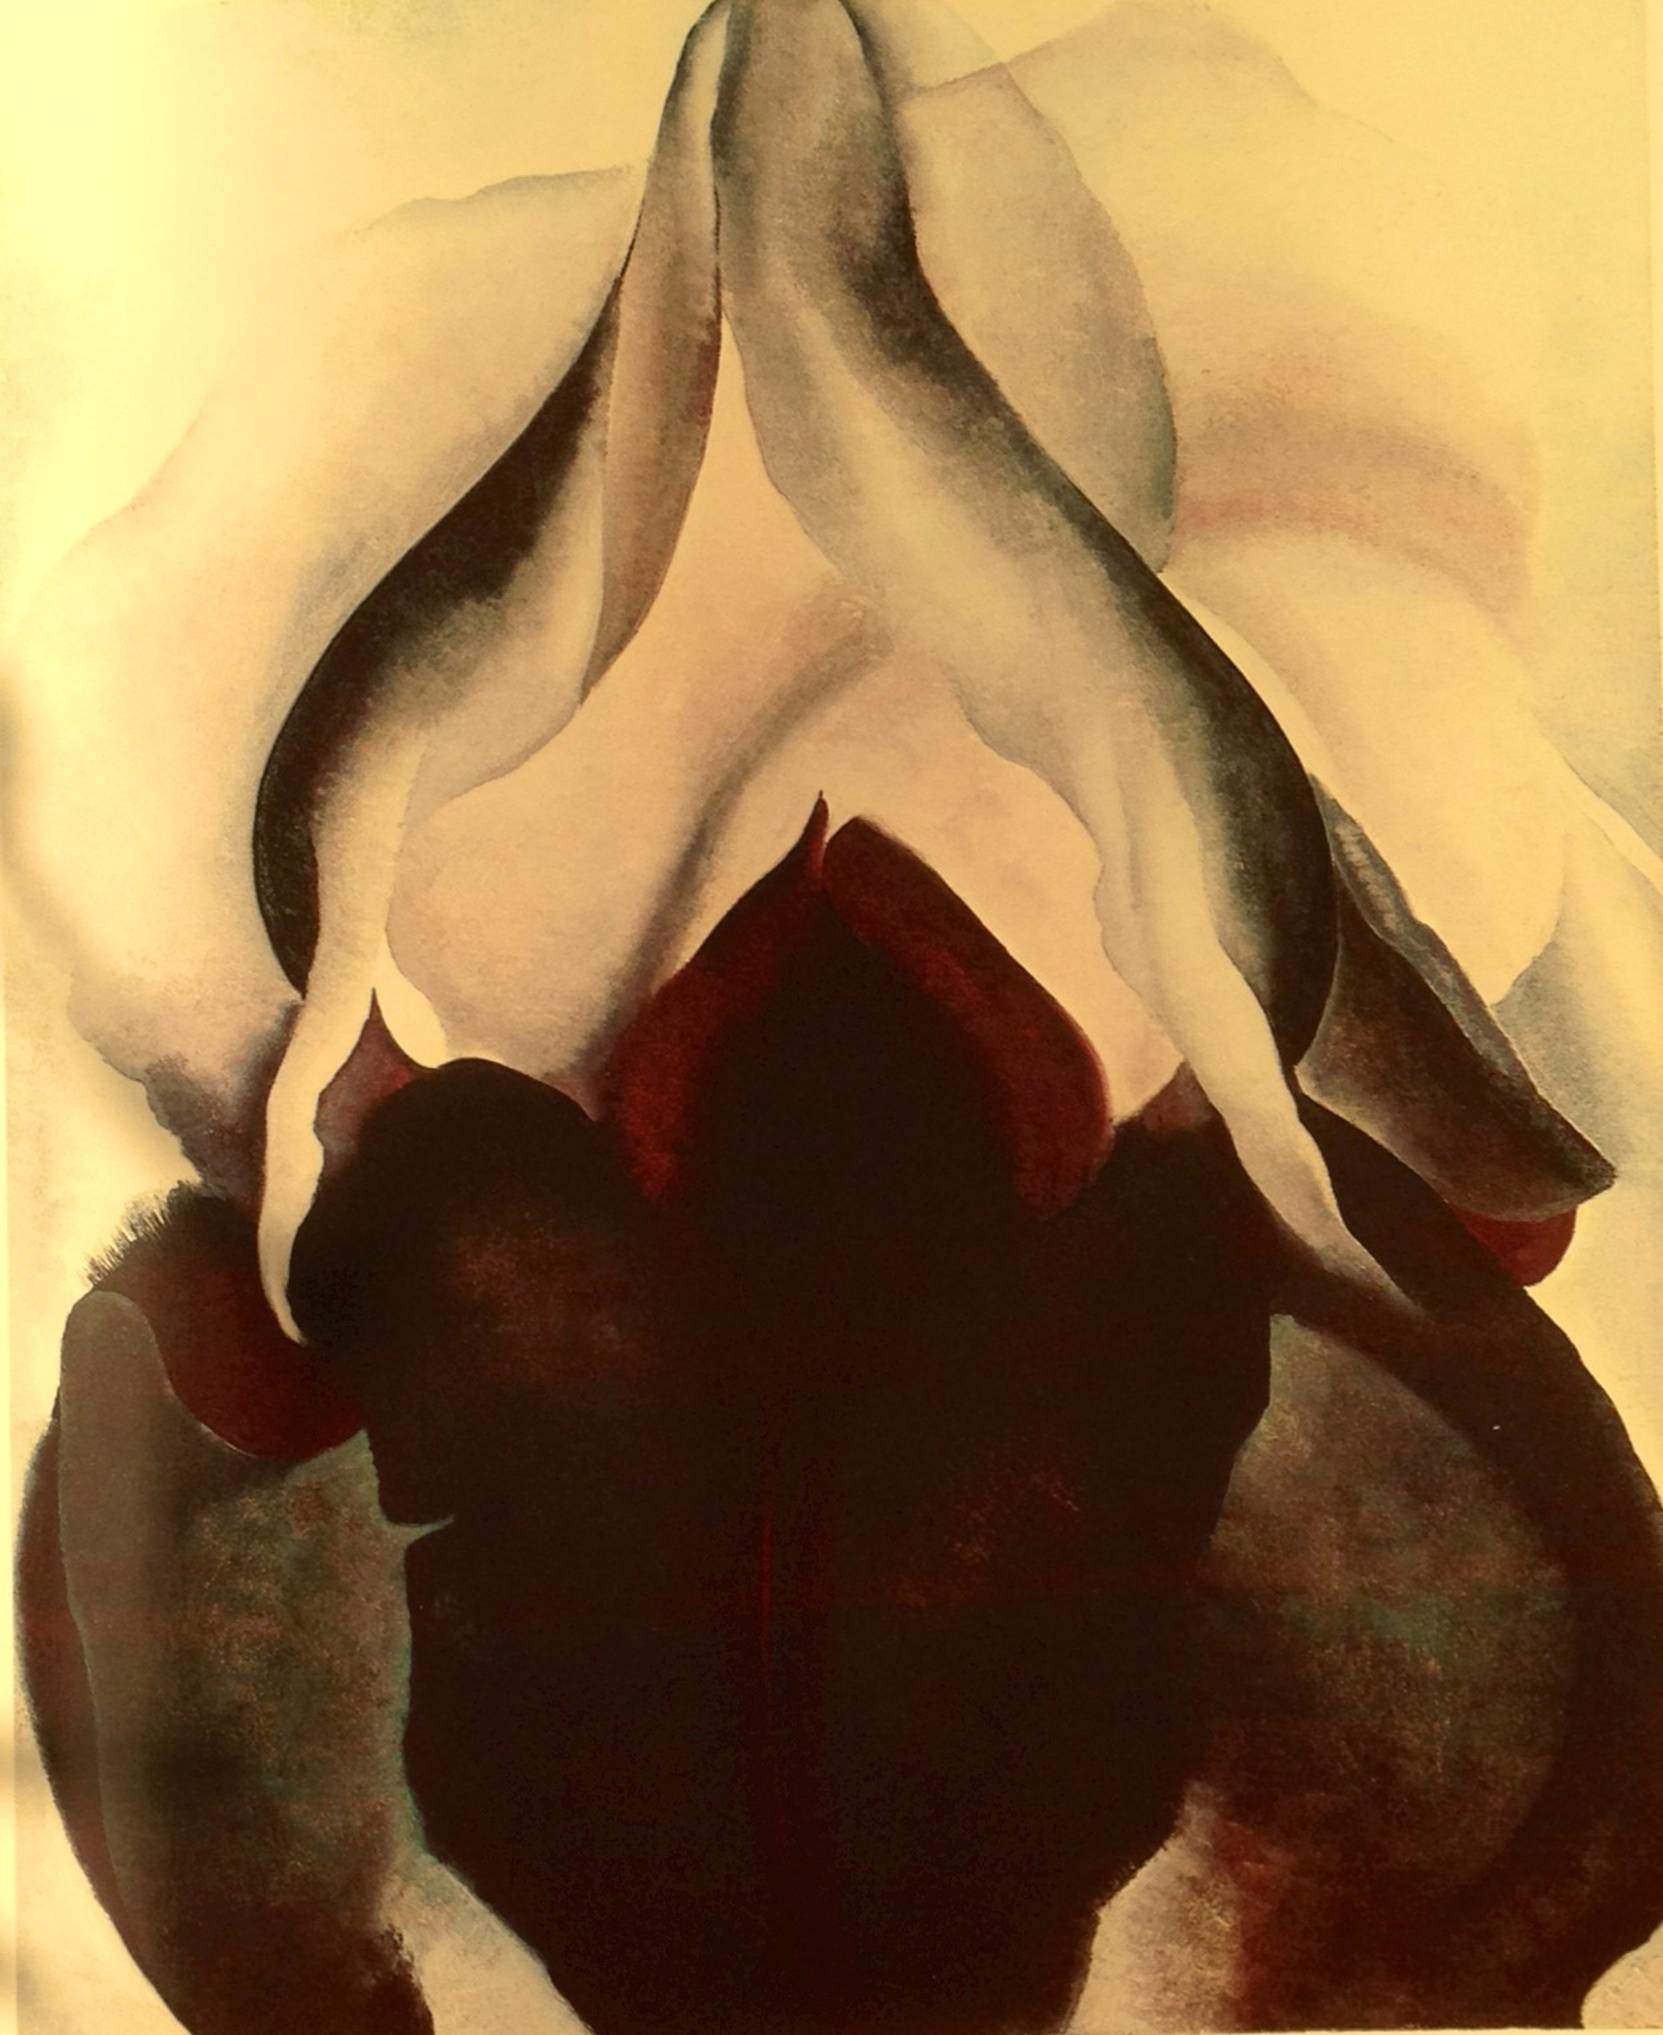 Georgia O’Keeffe, Black Iris, 1926.